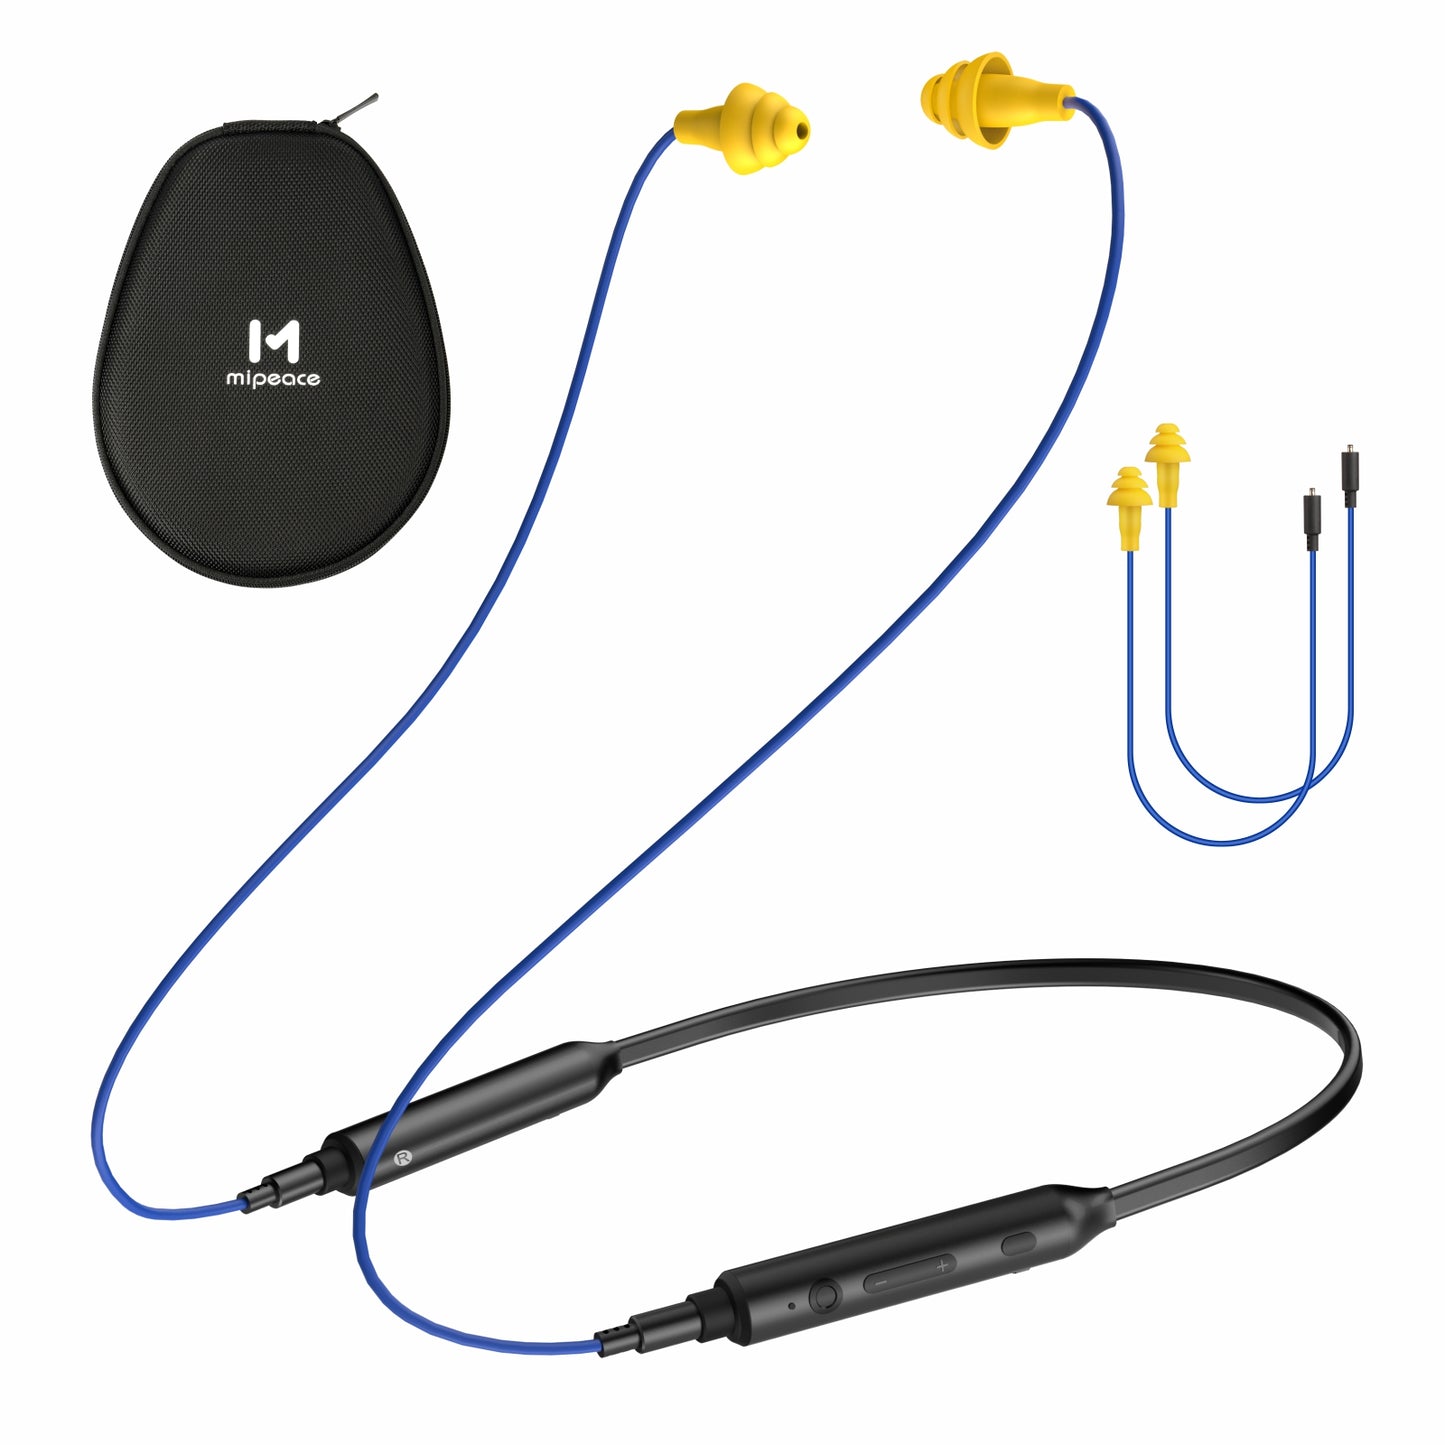 Earplug Work Headphones, Neckband Ear Protection Bluetooth earplugs Headphones with Replacement Buds